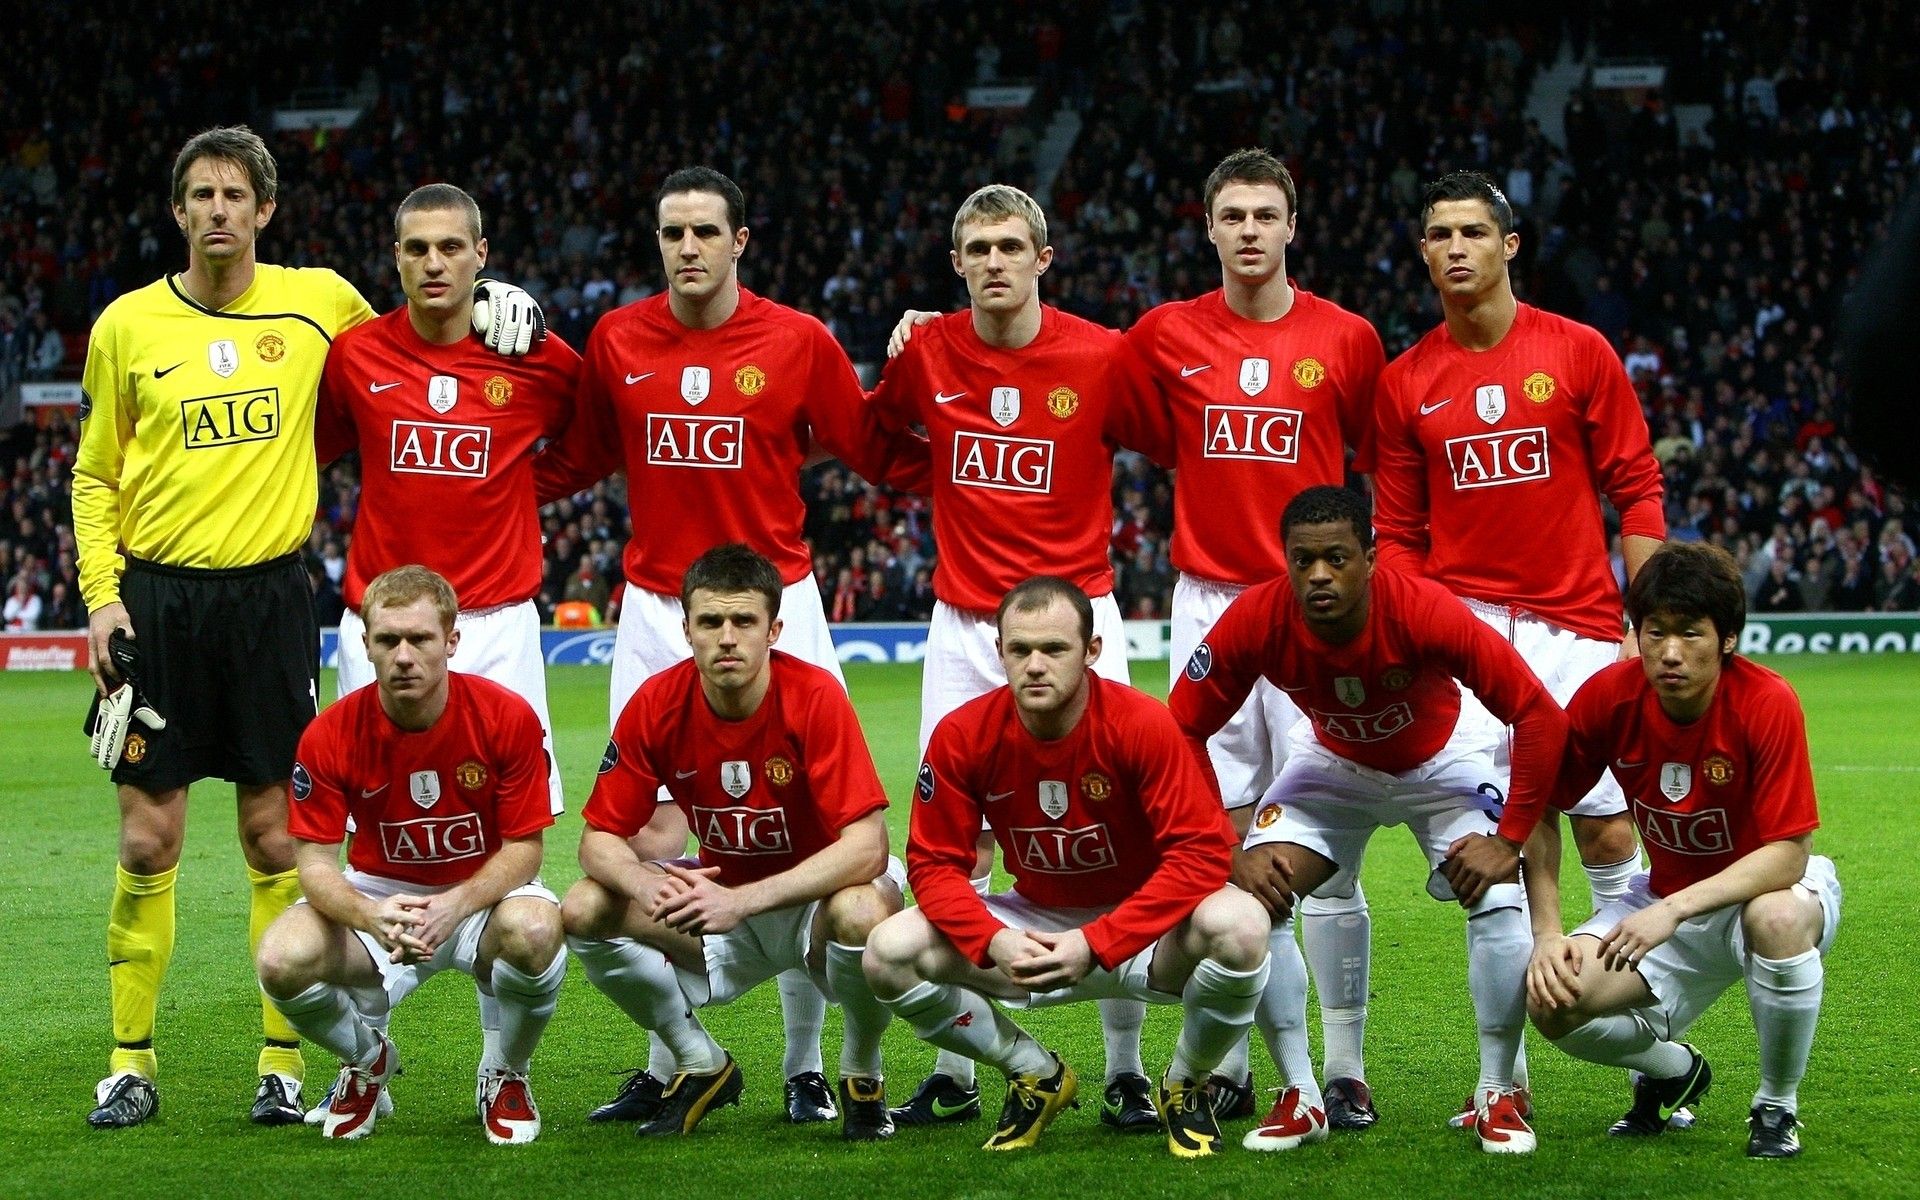 Manchester United squad 2008 | Manchester united team, Manchester united wallpaper, Manchester united soccer